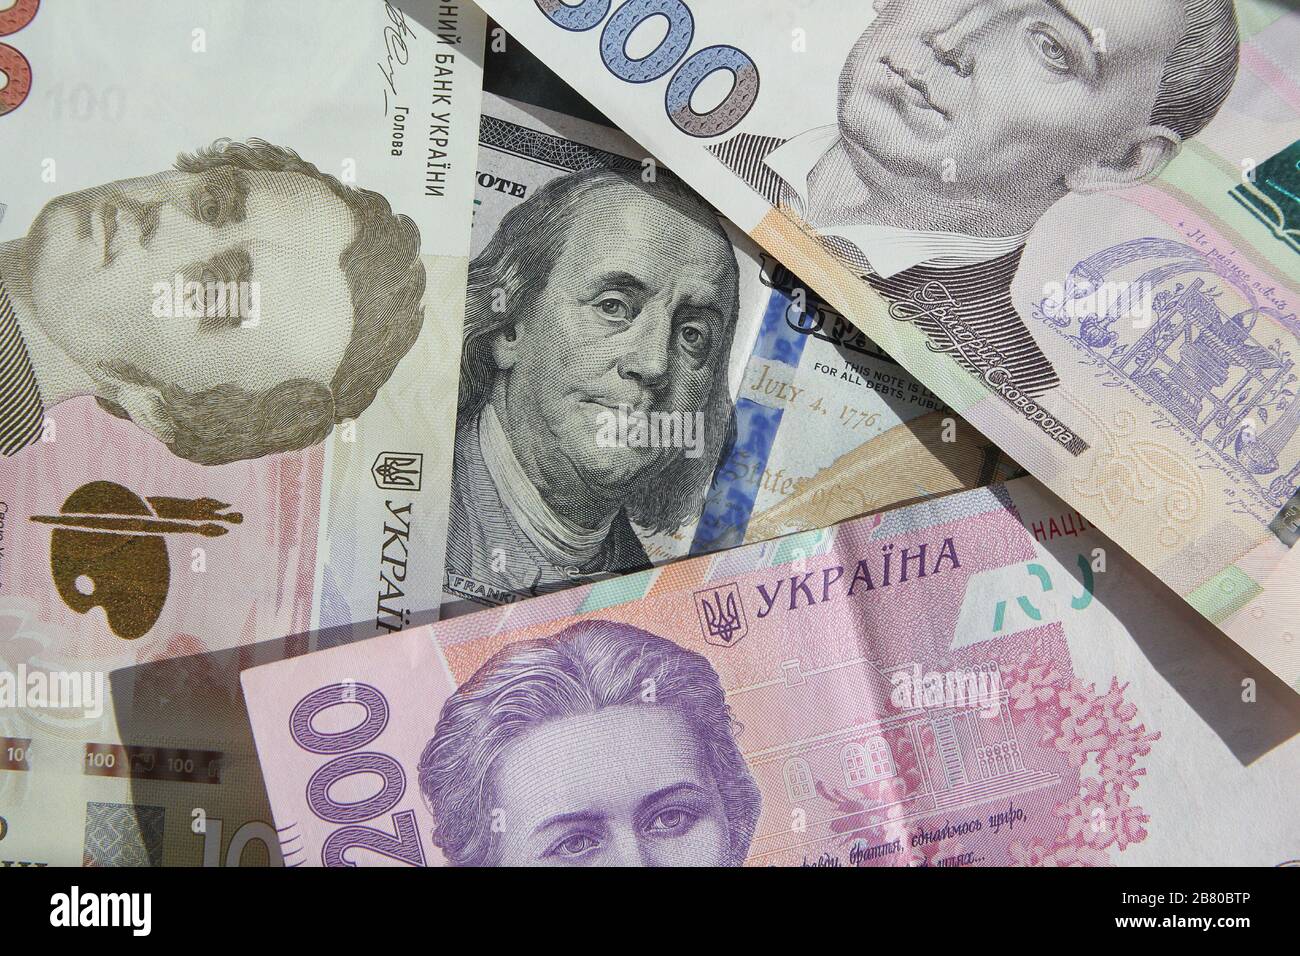 Ukrainian money - hryvnia banknotes USA dollars bills. Finance in Ukraine, of the hryvnia to the dollar exchange rate Stock Photo